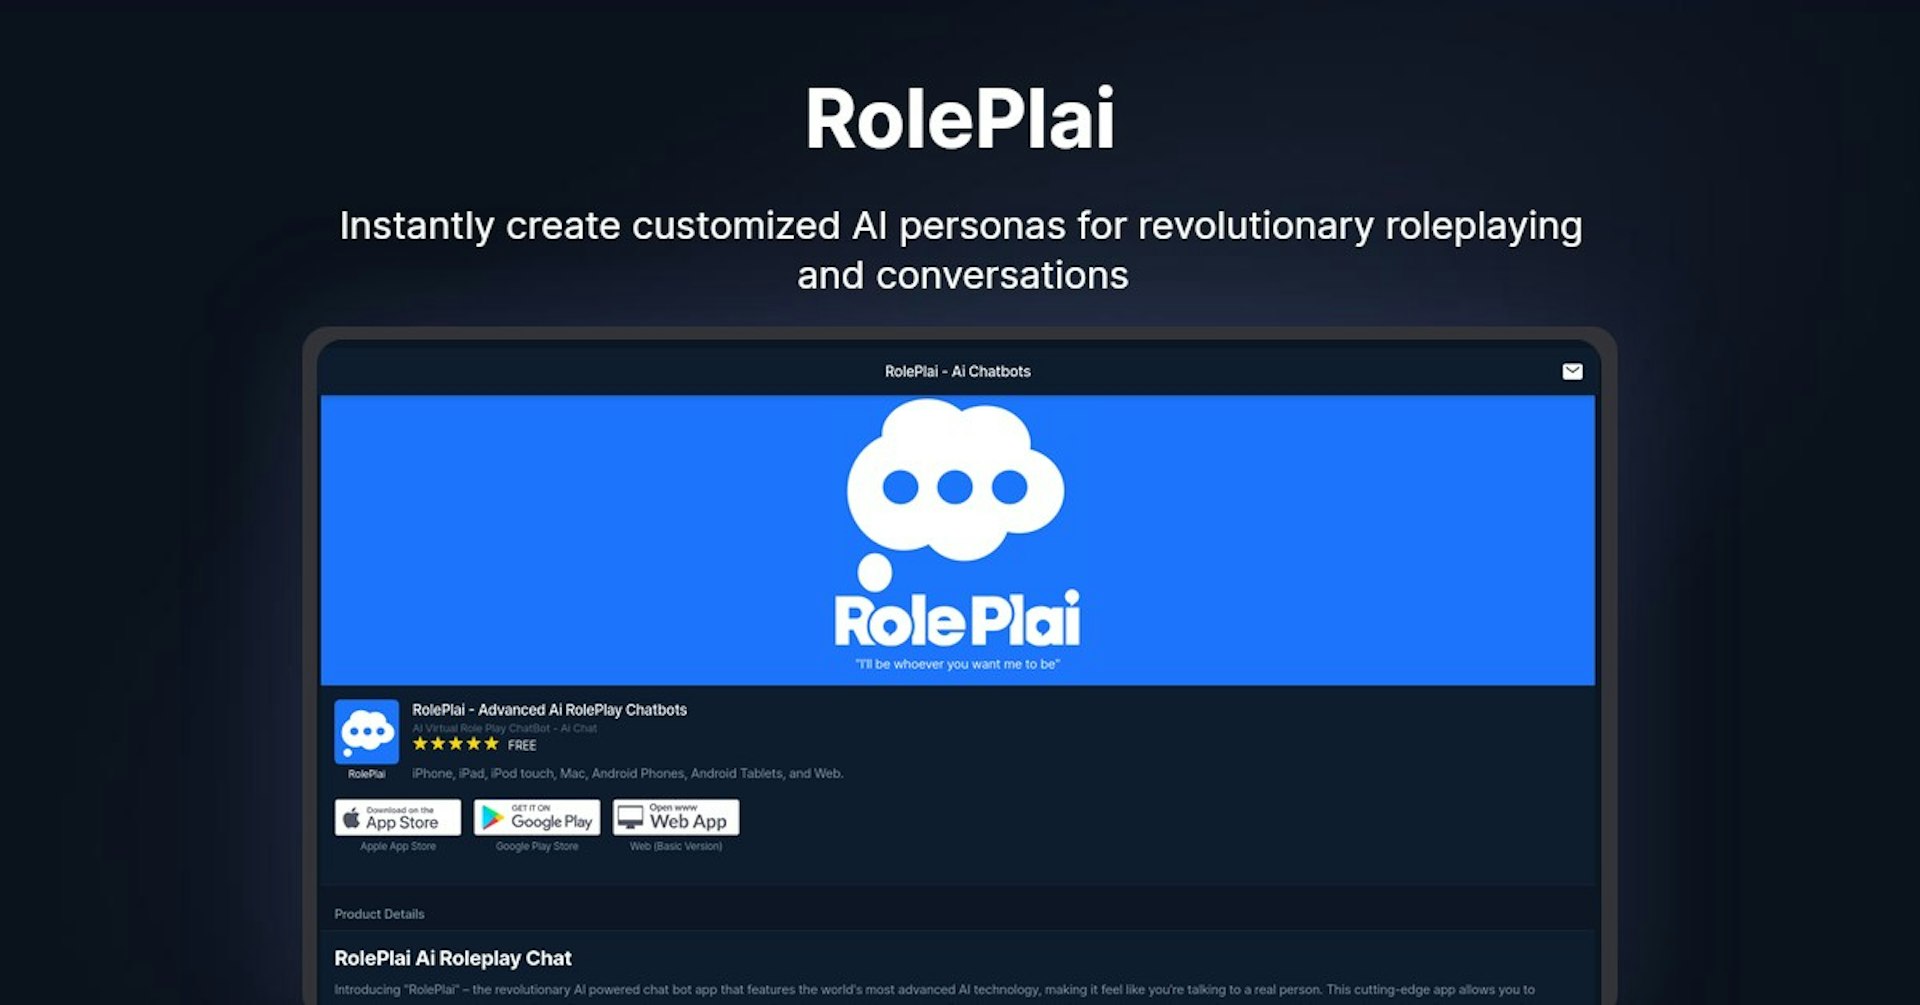 RolePlai